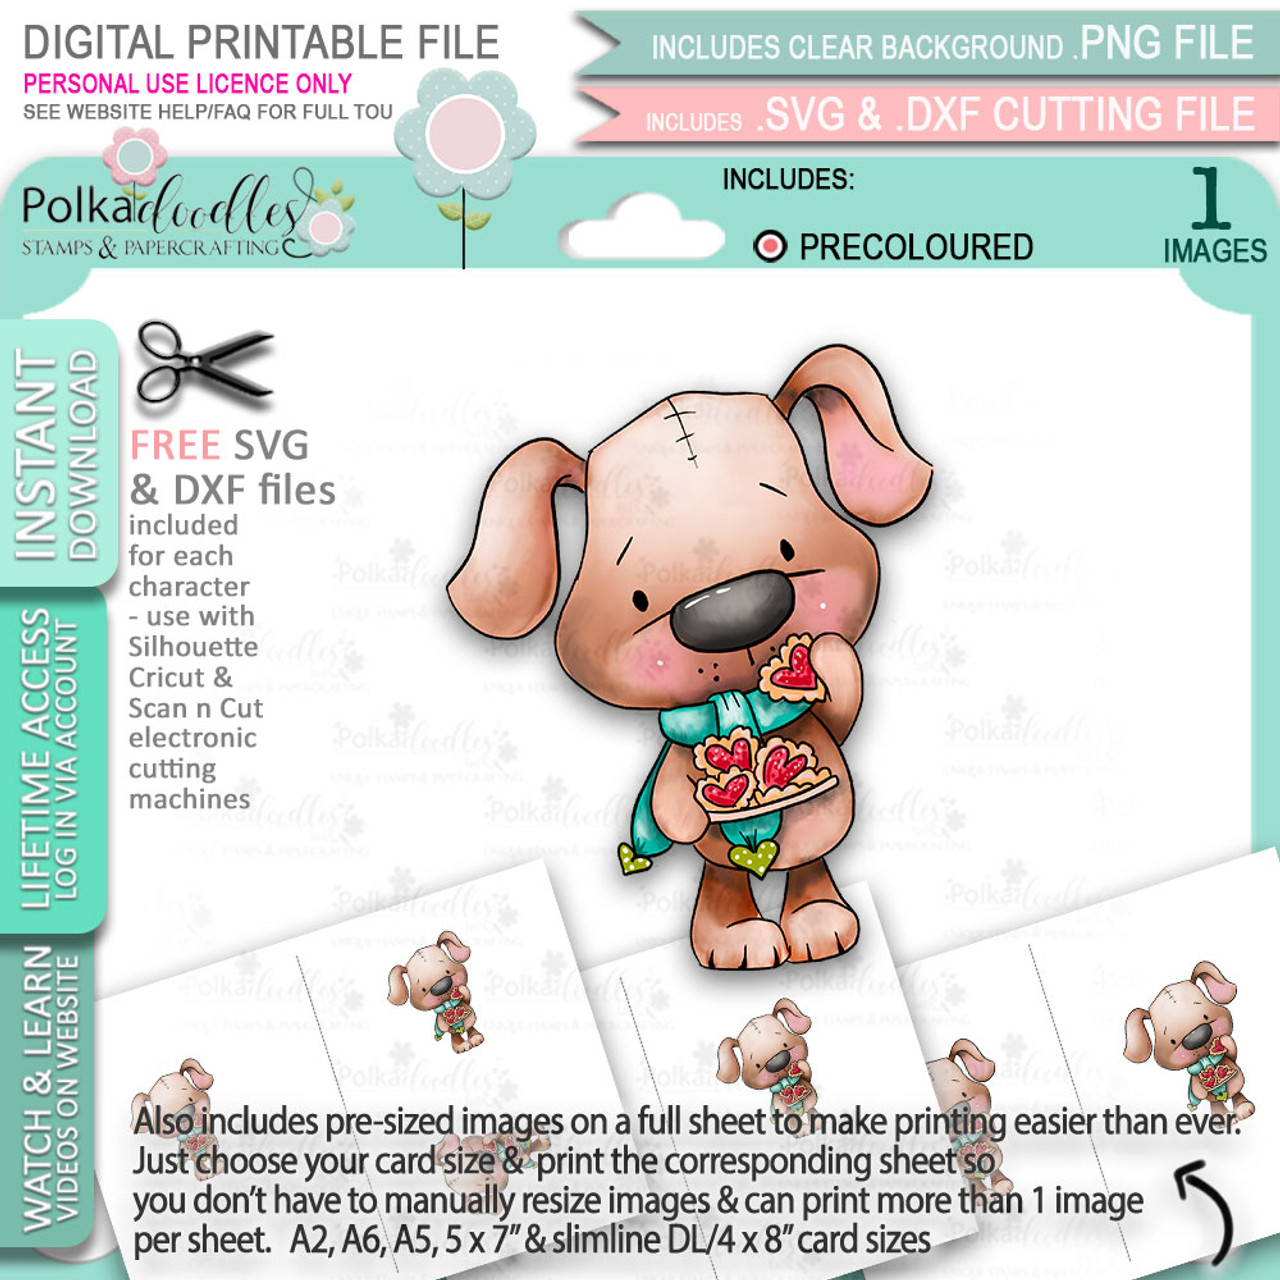 FREE Teddy Bear Heart SVG Valentine cut file - Craft House SVG